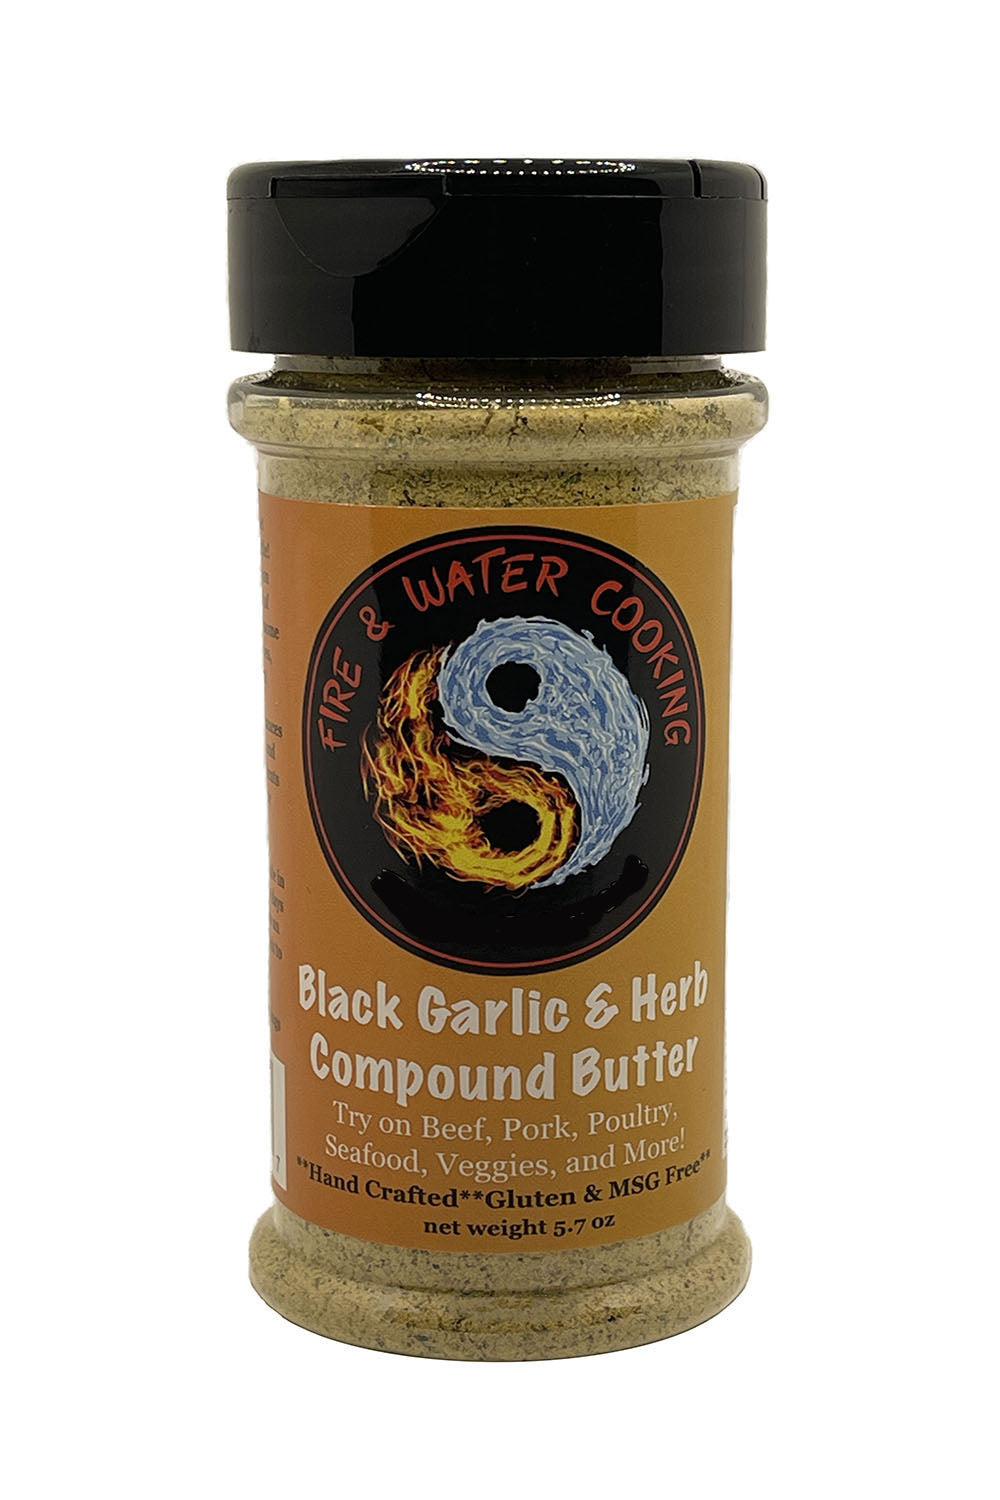 Fire & Water Cooking Black Garlic & Herb Compound Butter Seasoning